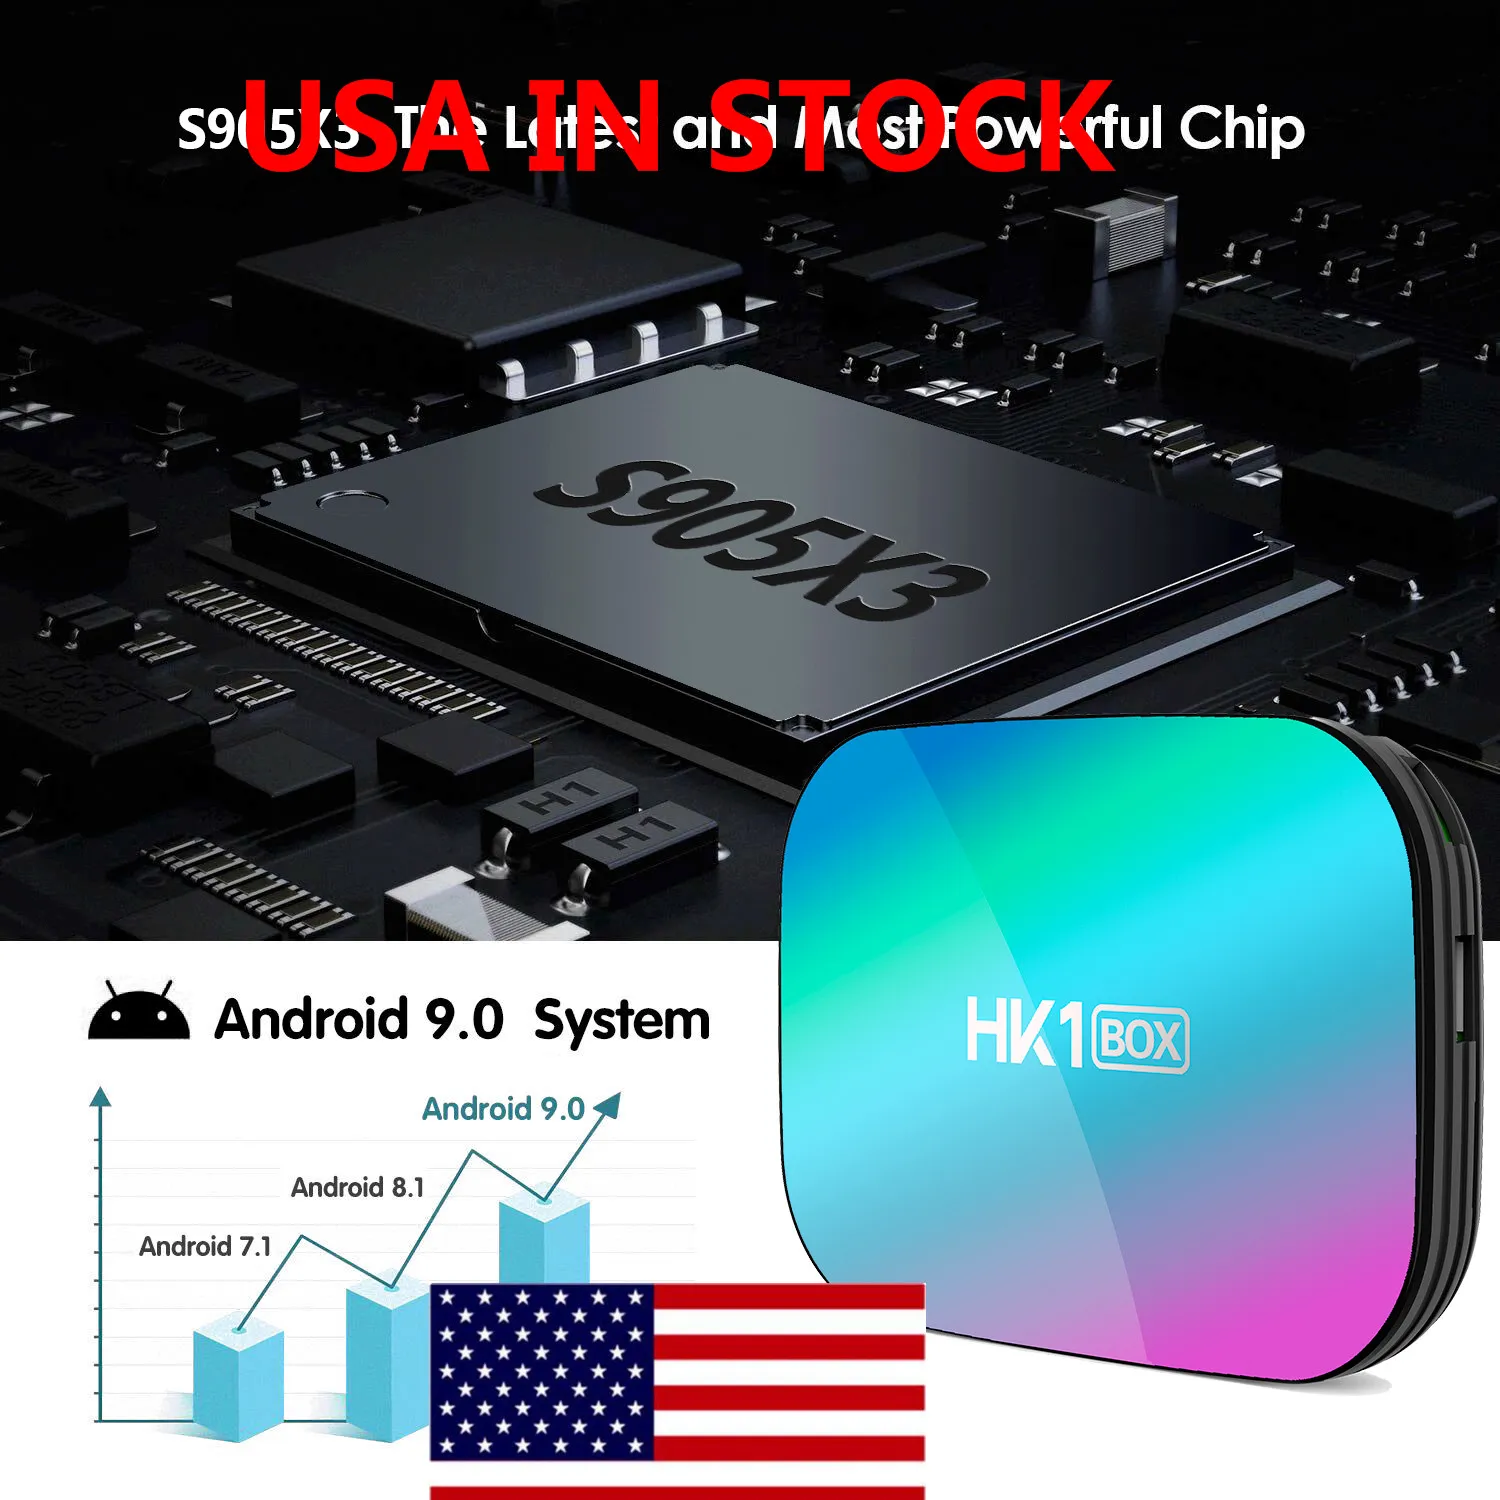 USA HK1 AMLOGIC S905X3 TV BOX ANDROID 9.0 SMART 1000M 8K QUAD CORE 4G RAM 32GB ROM DUAL WIFI